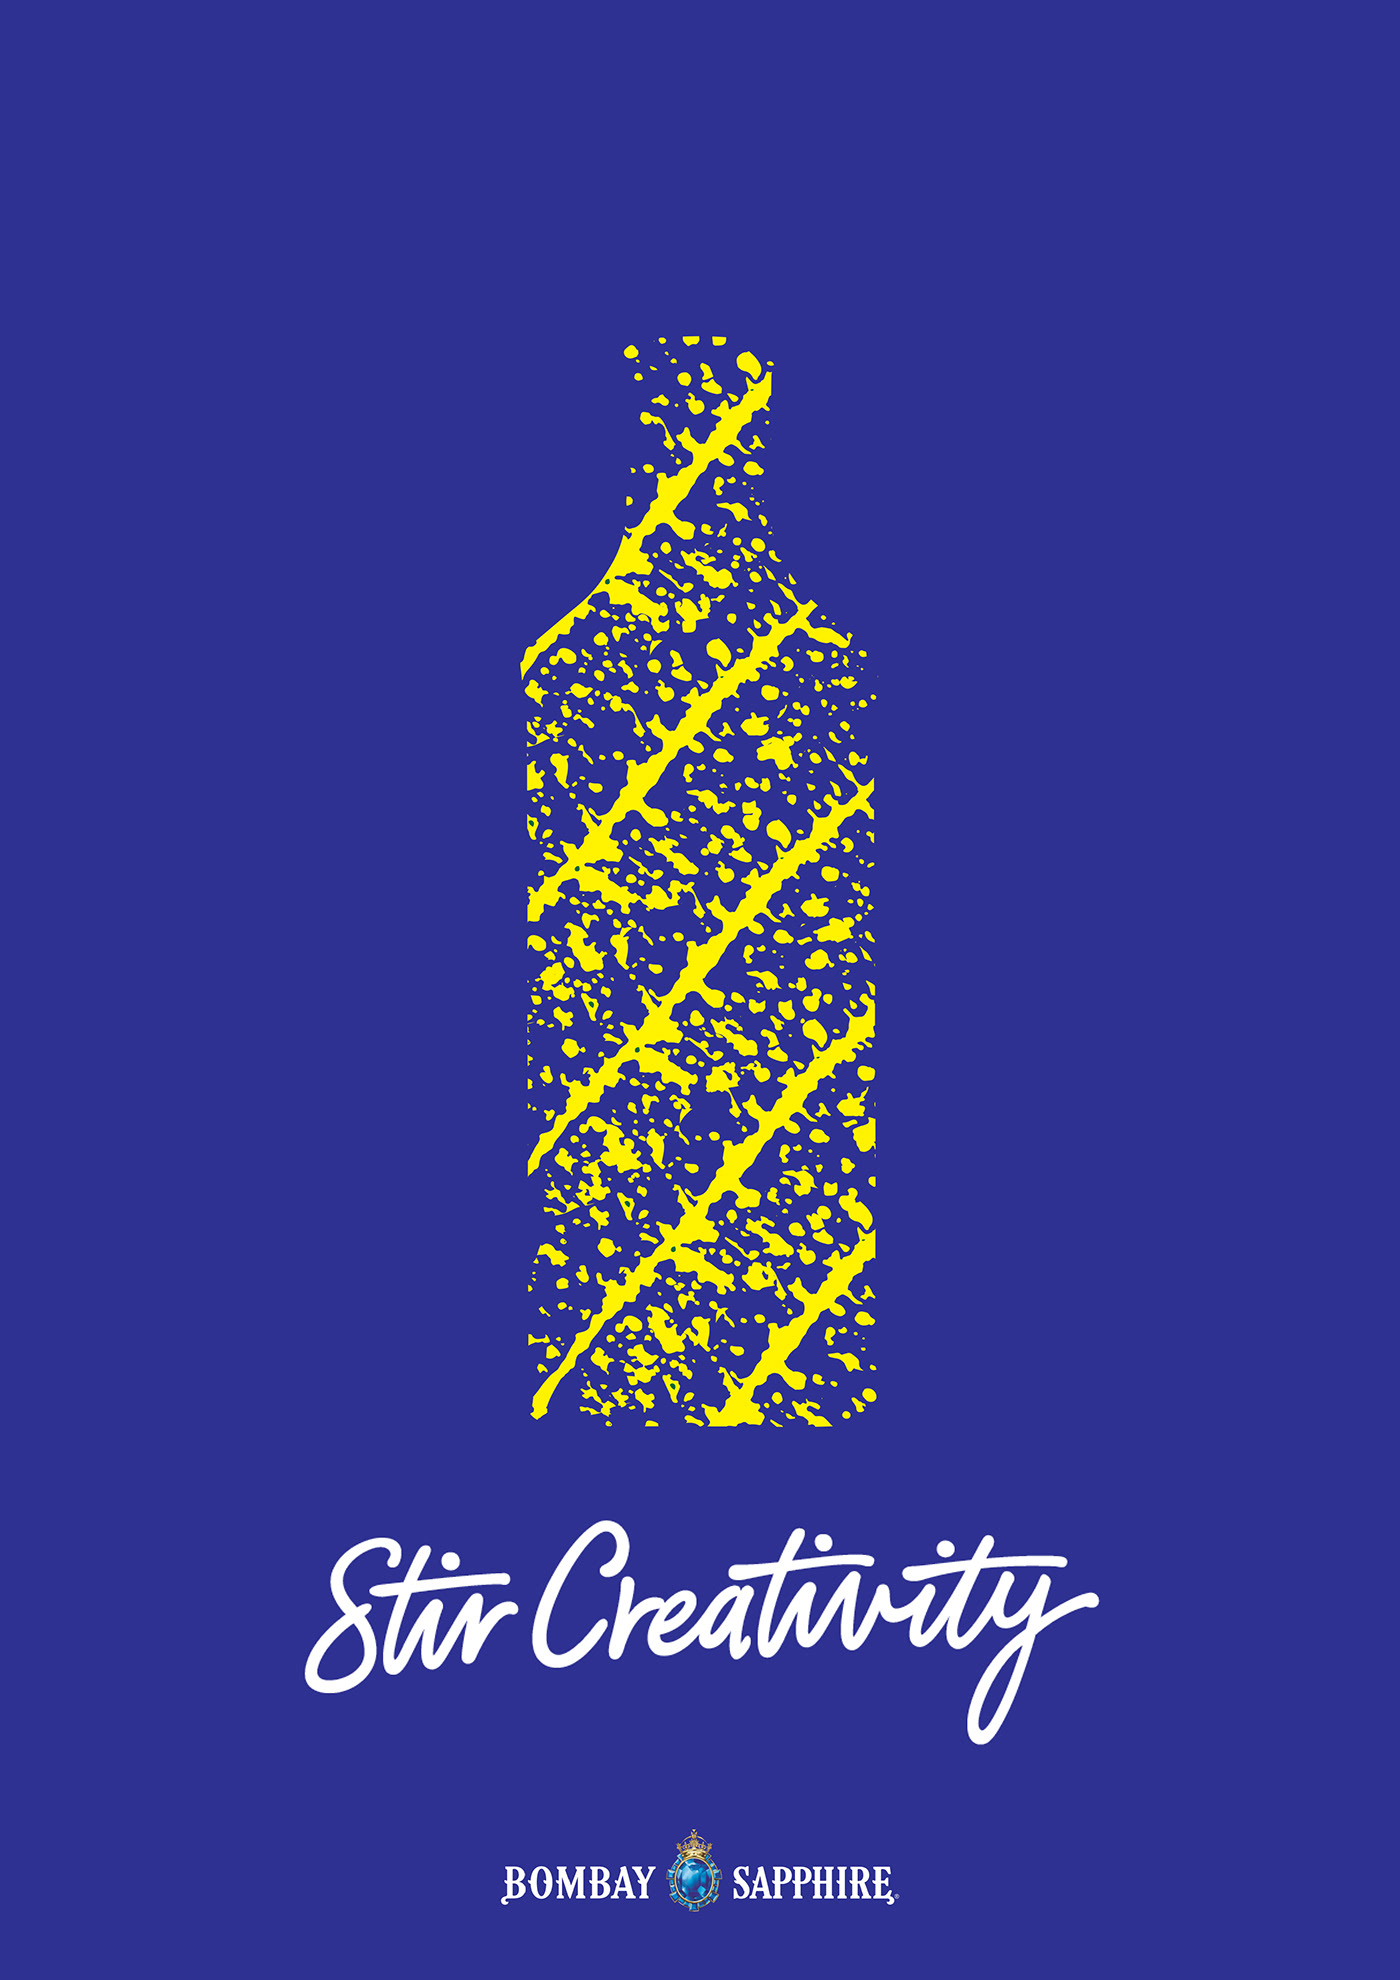 Bombay Sapphire STIR CREATIVITY talenthouse artwork adobe illustrator branding  Campaign Design Advertising  marketing  